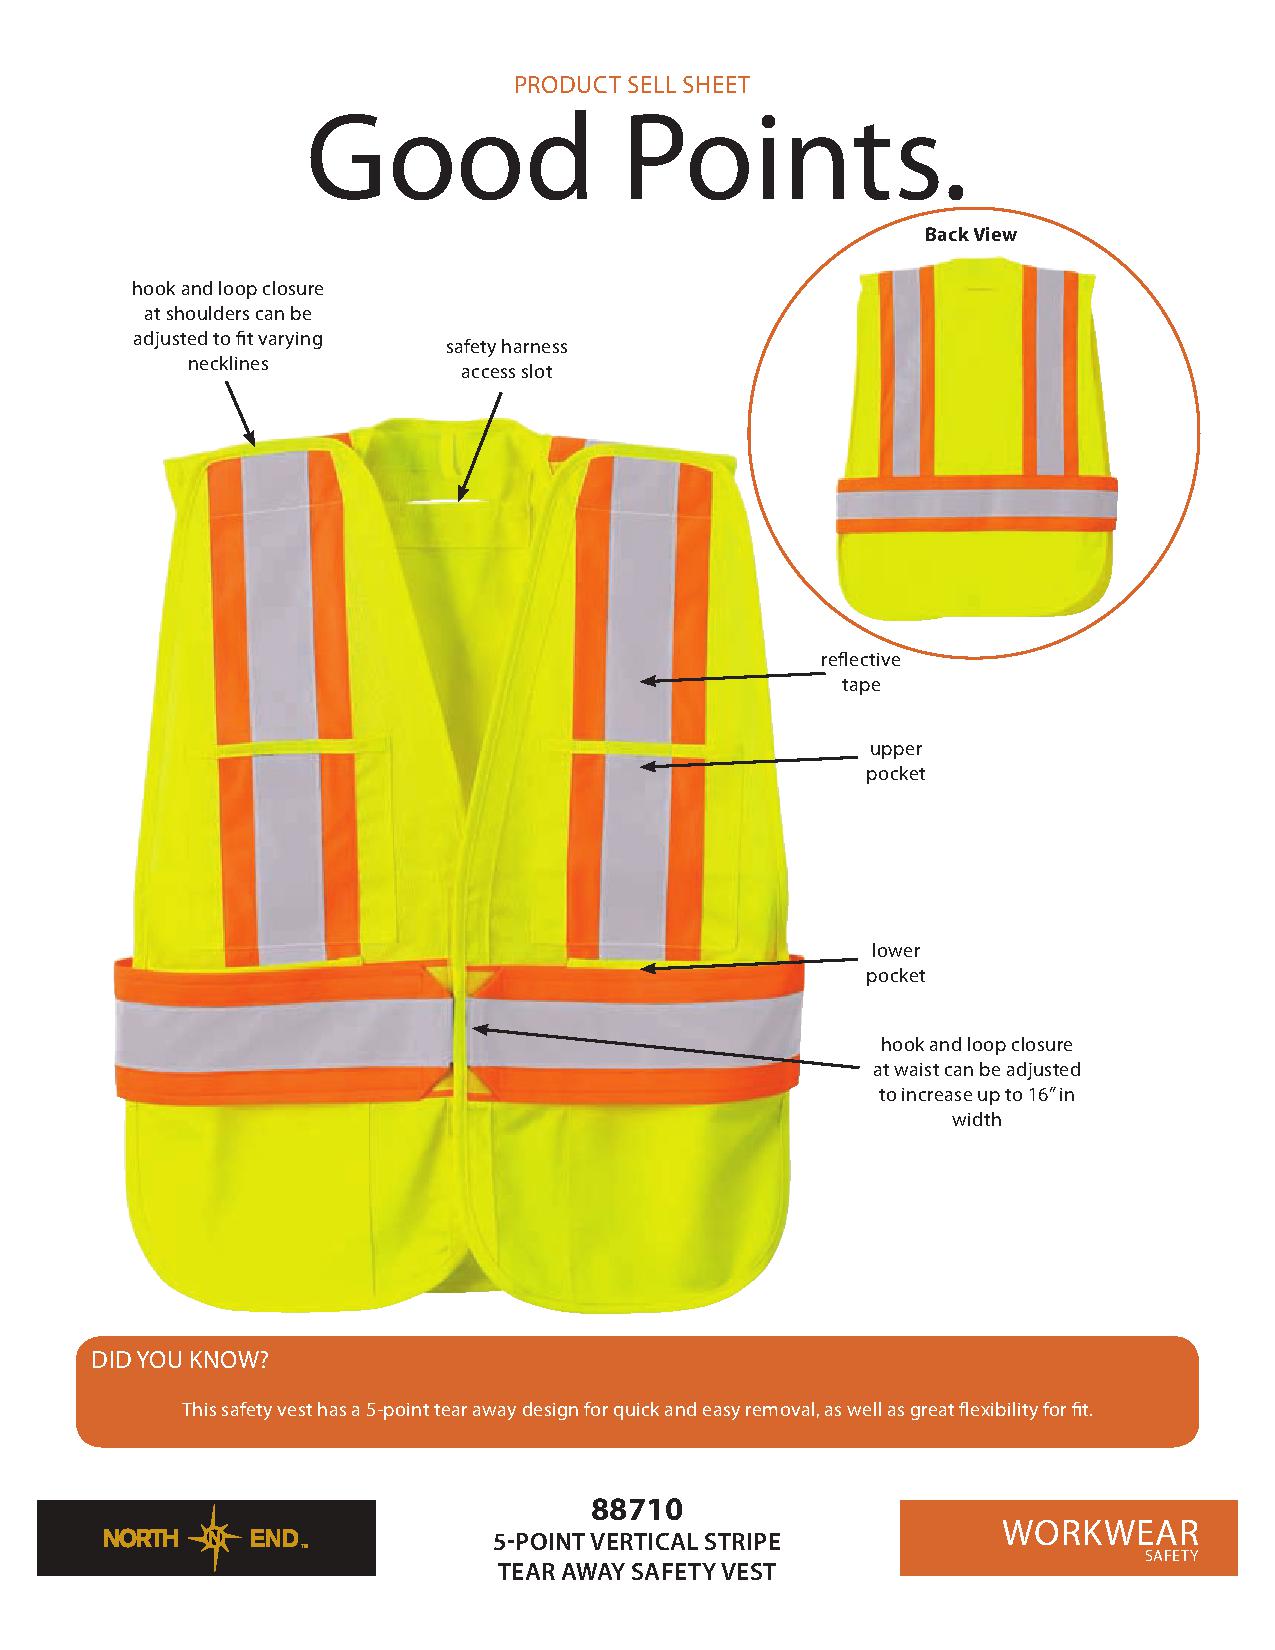 Ash City Lifestyle Vests 88710 - 5-Point Vertical Stripe Tear Away Safety Vest